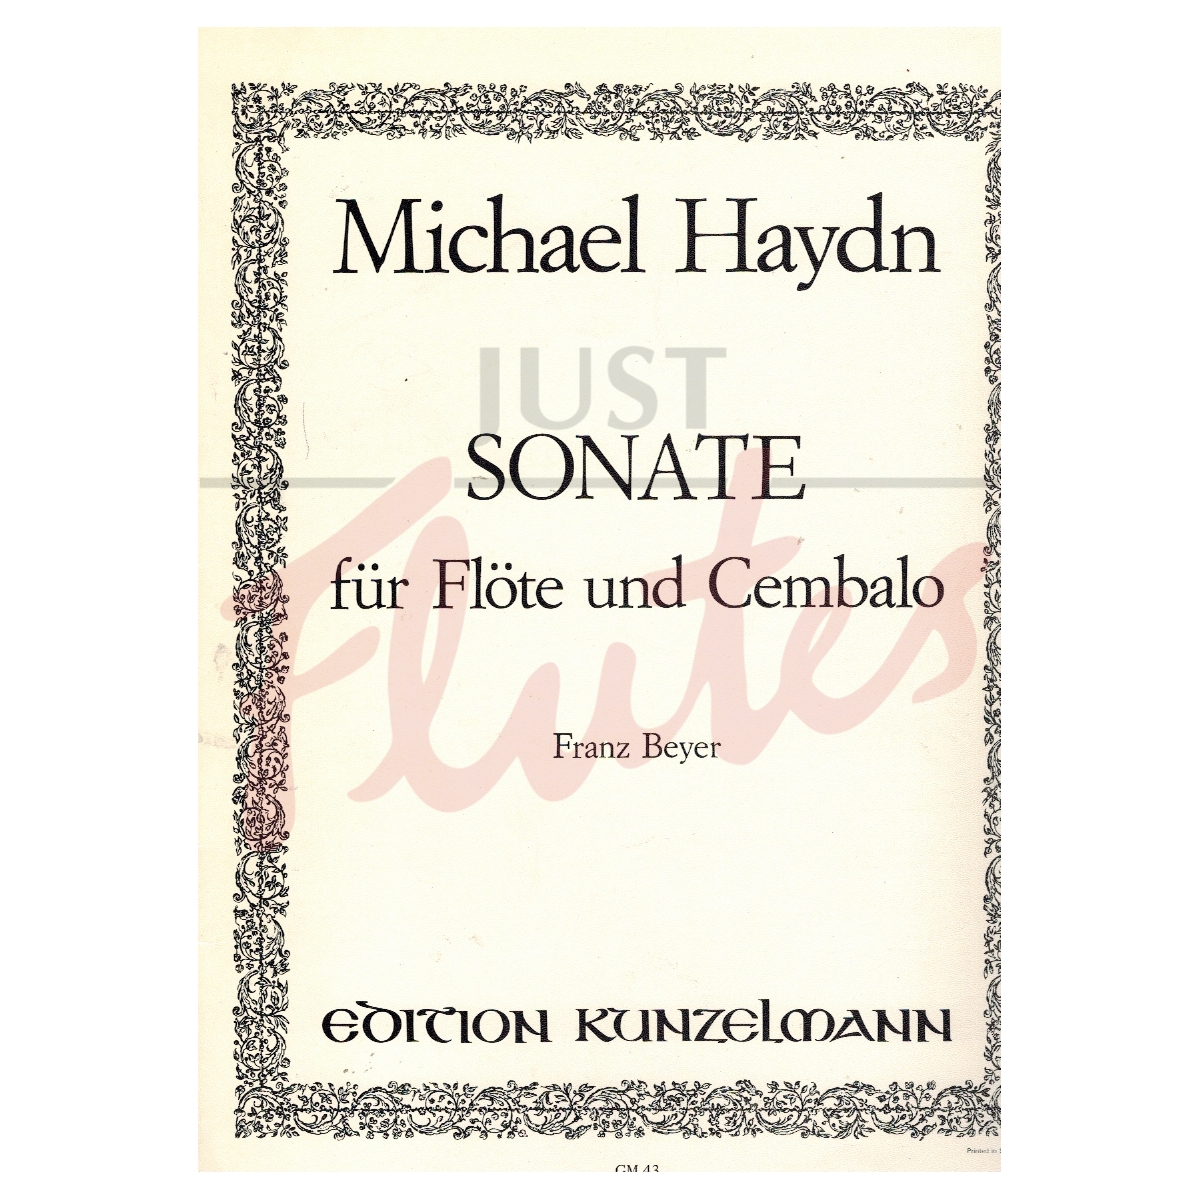 Flute Sonata in G major